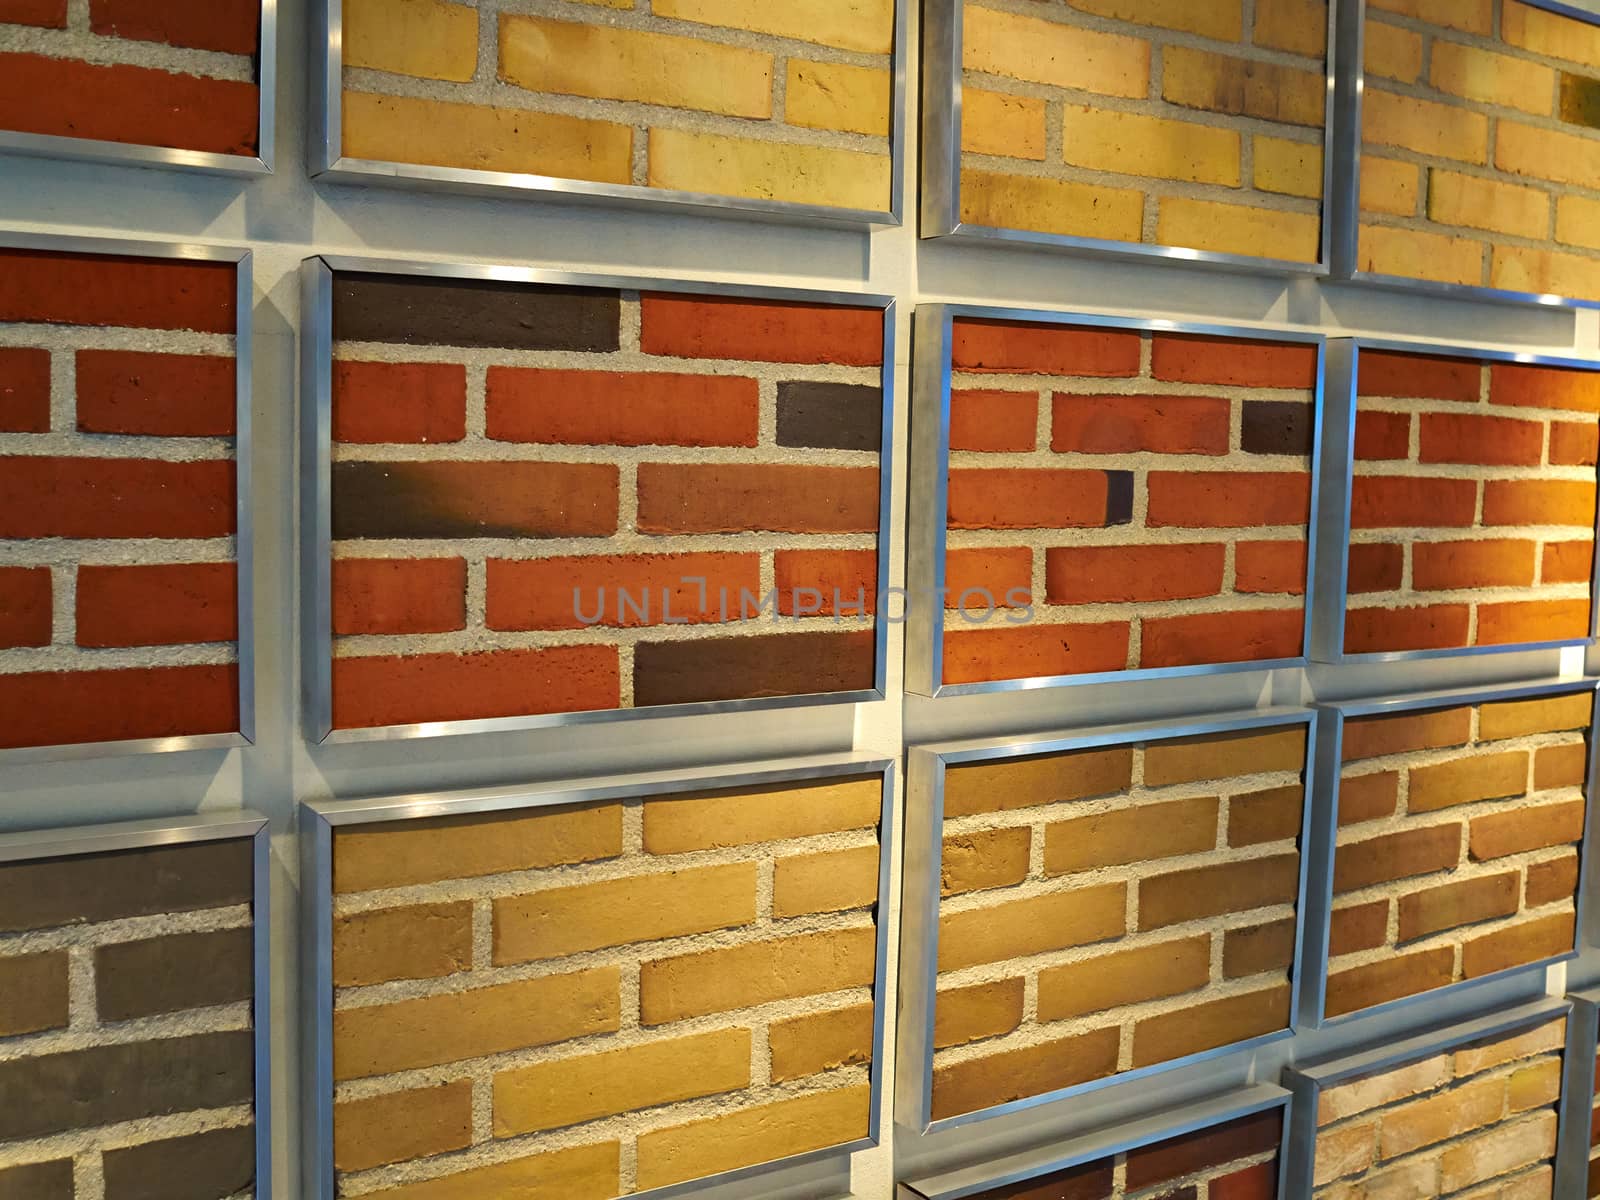 Beautiful design decorative bricks on display in store